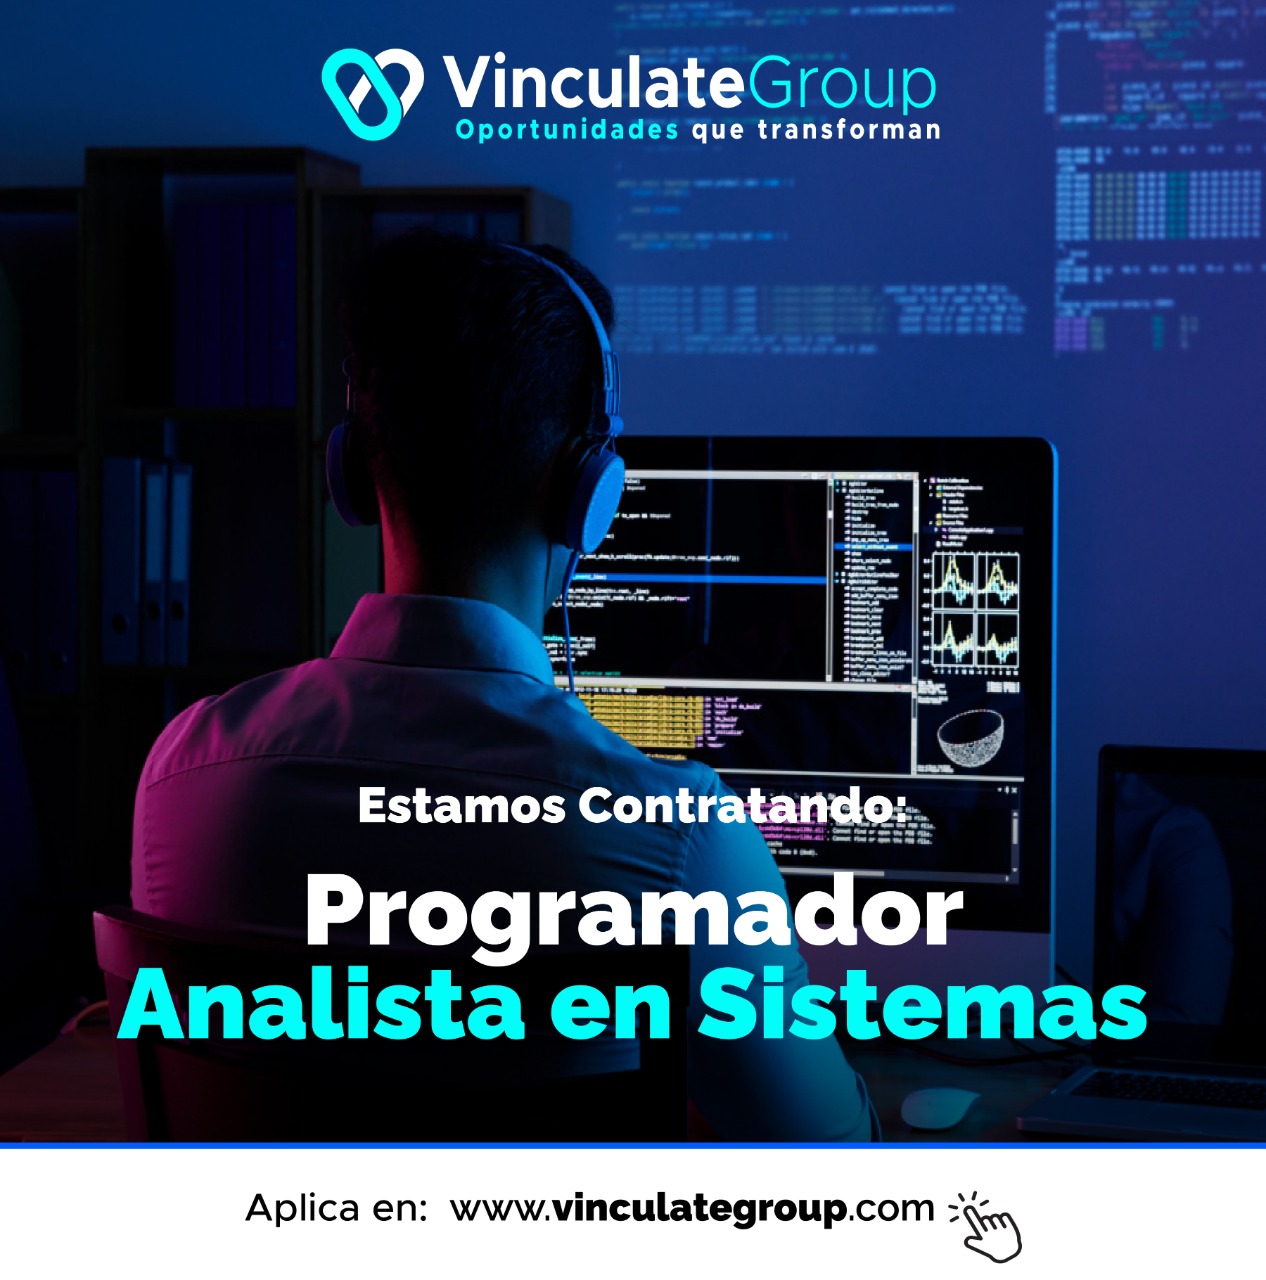 1% VinculateGroup
Oportunidades que transforman

 

CLEC
Analista en Sistemas

 

Aplica en: www.vinculategroup.com Ty